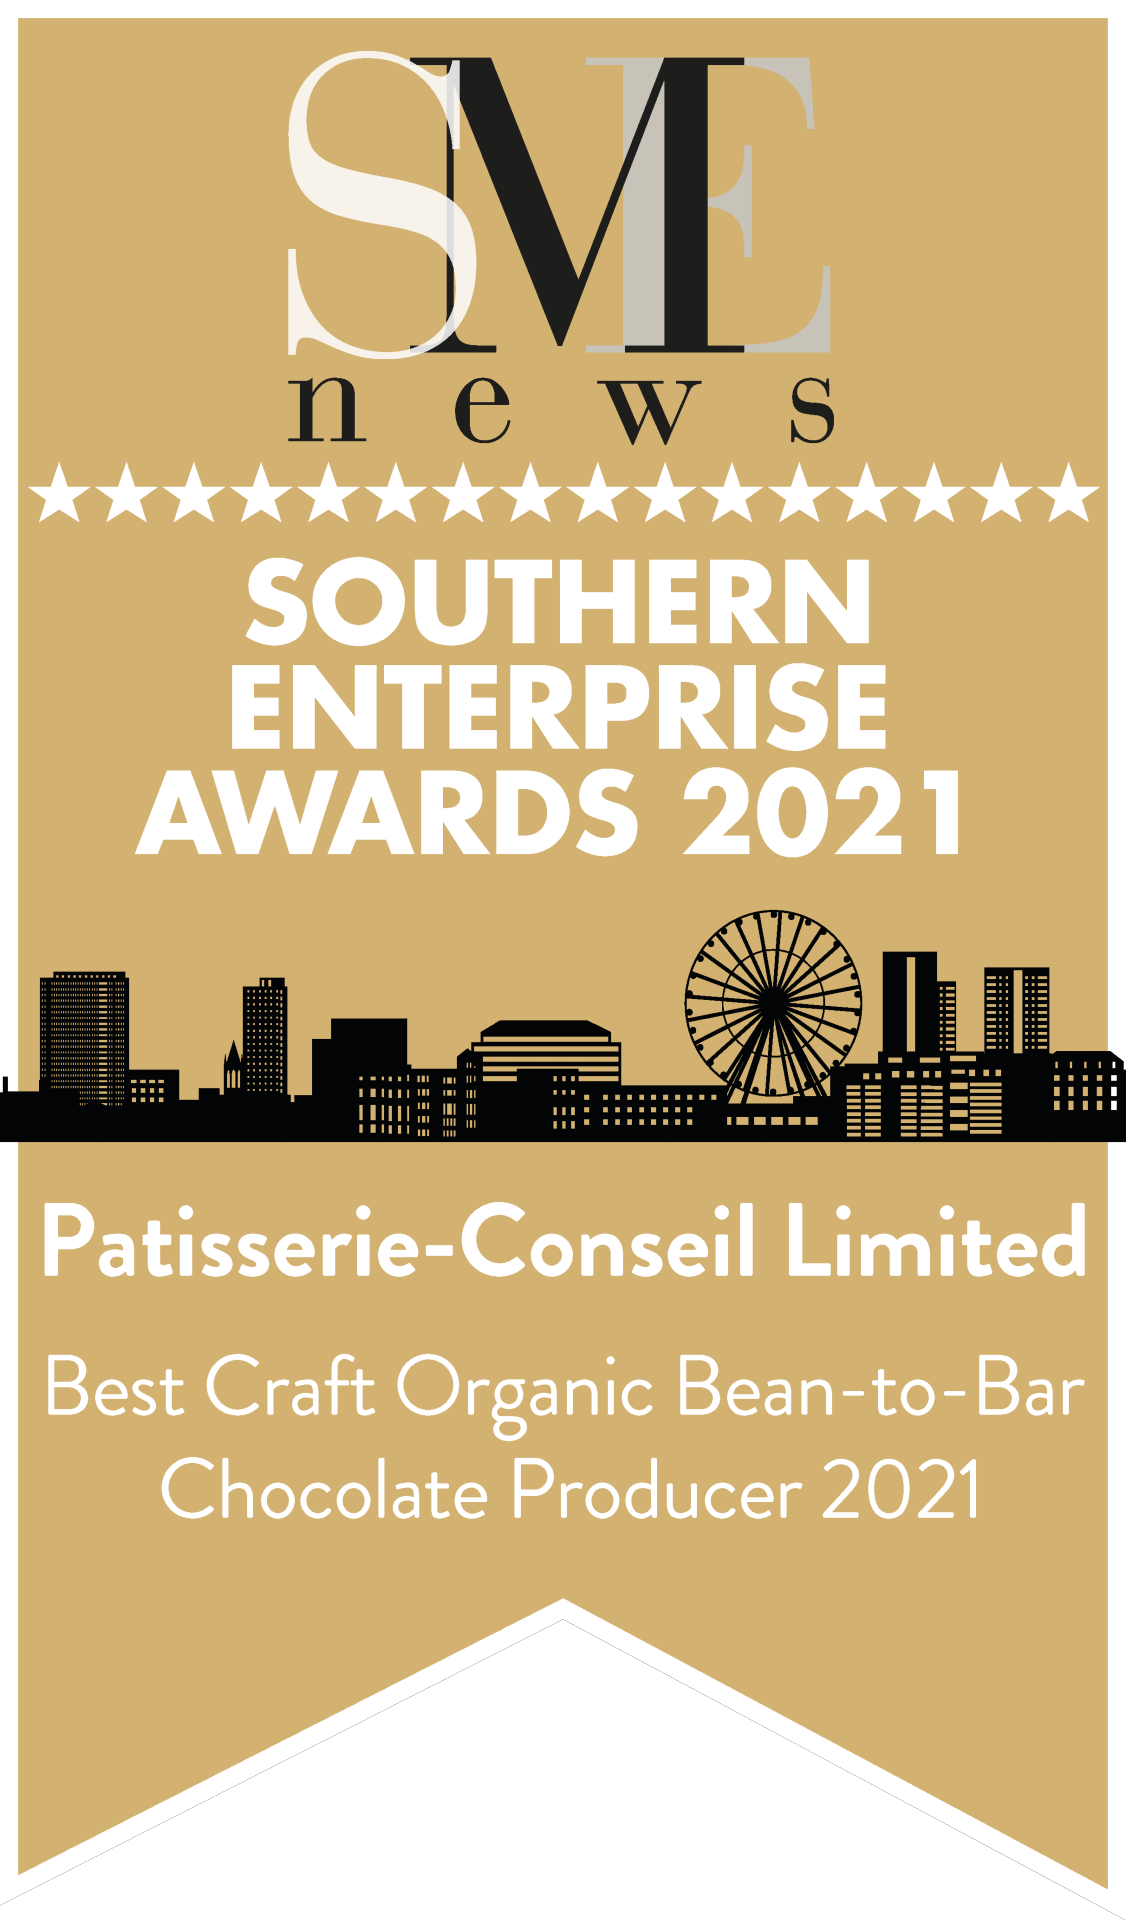 Aug21318-SME News Southern Enterprise Awards 2021 Winners Logo.png